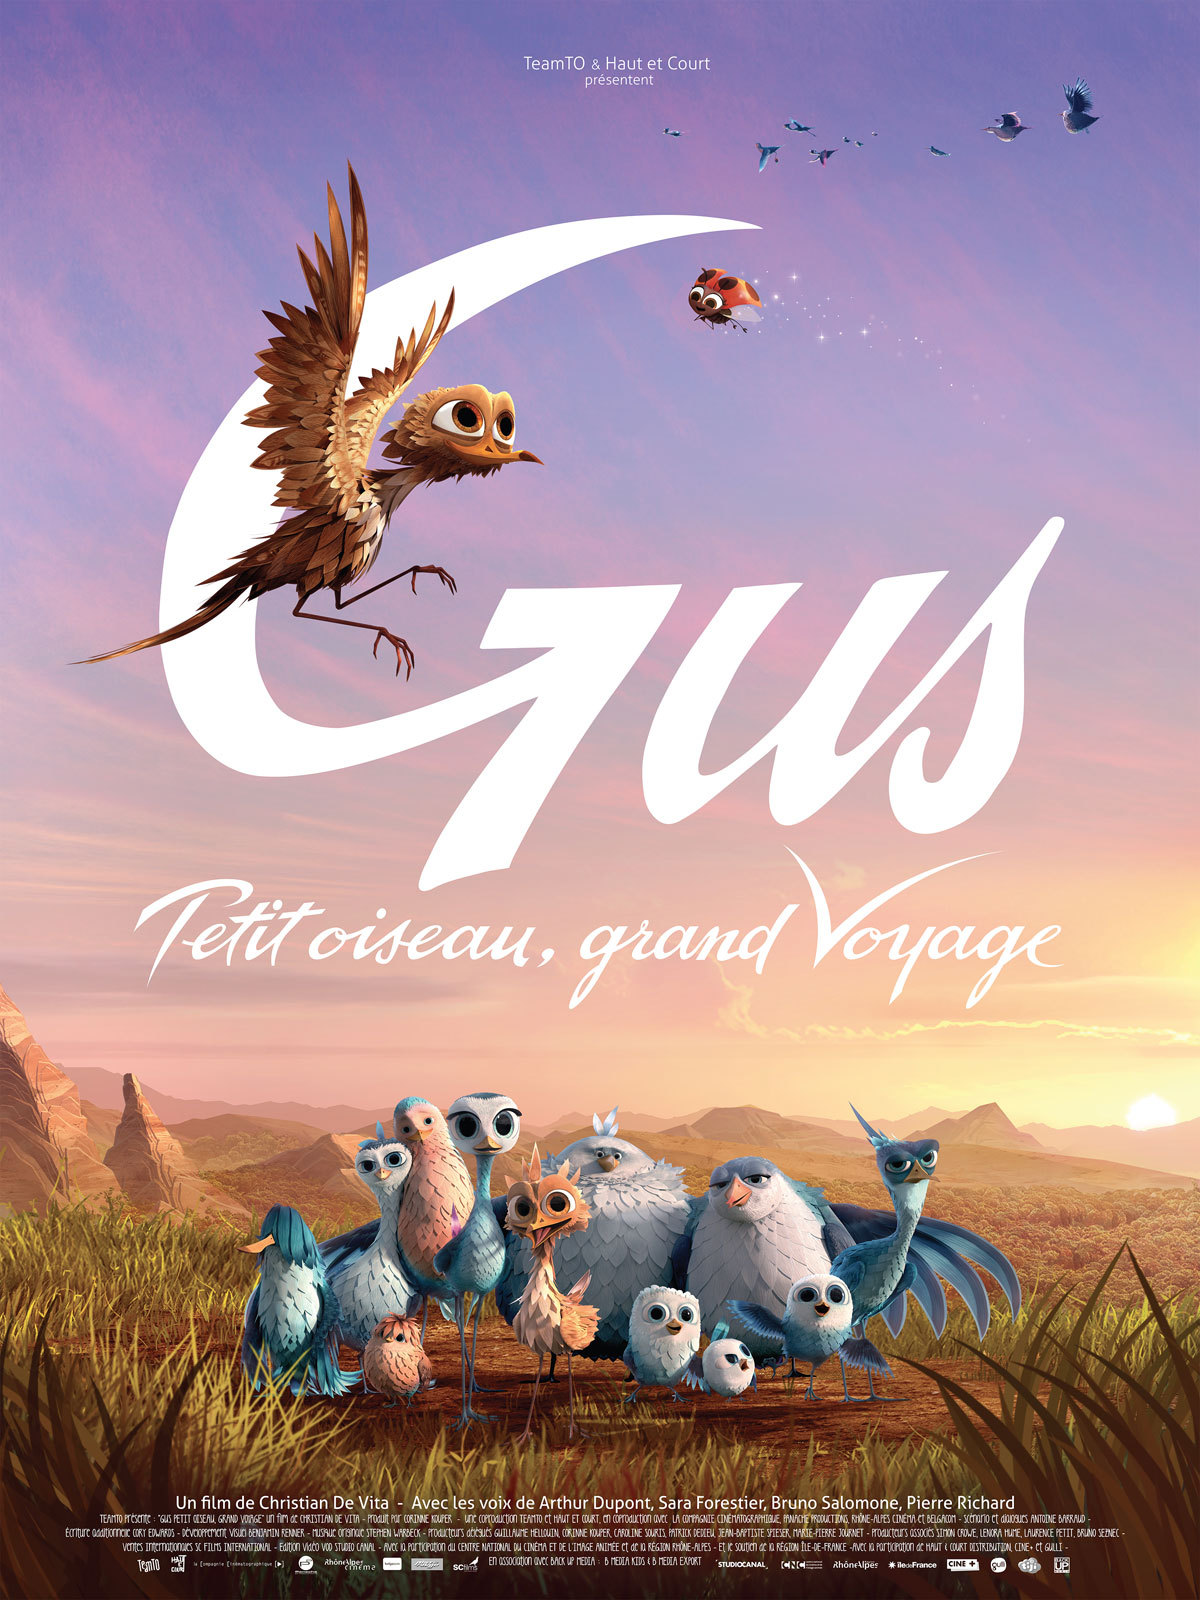 Gus Petit Oiseau Grand Voyage poster